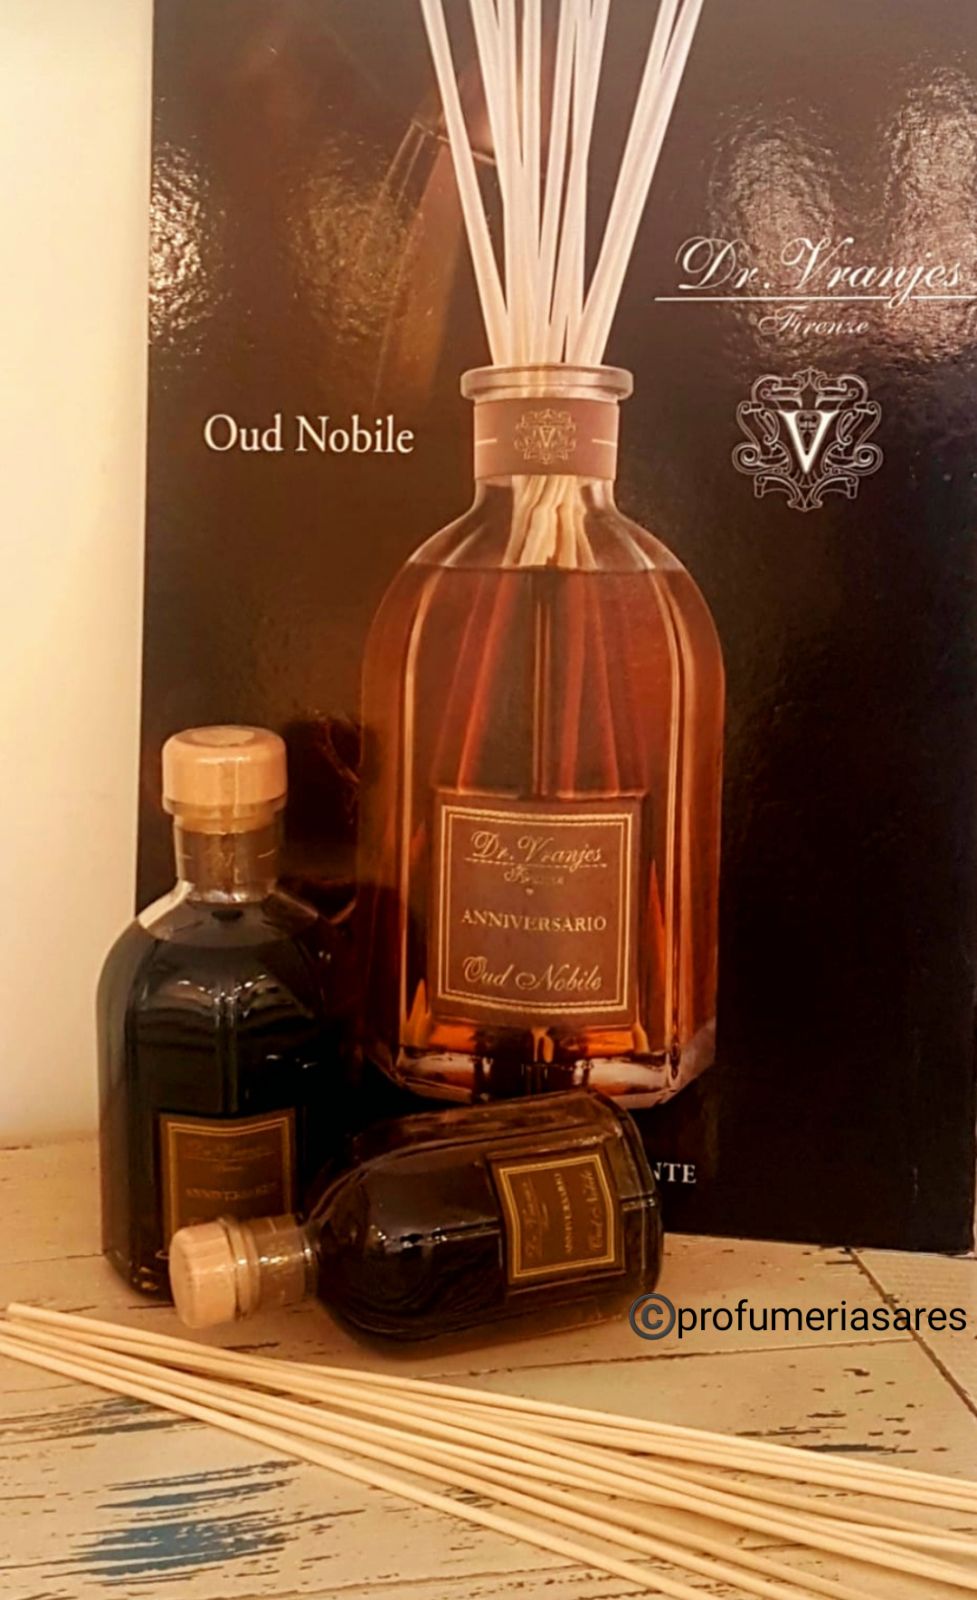 Dr. Vranjes - Oud Nobile